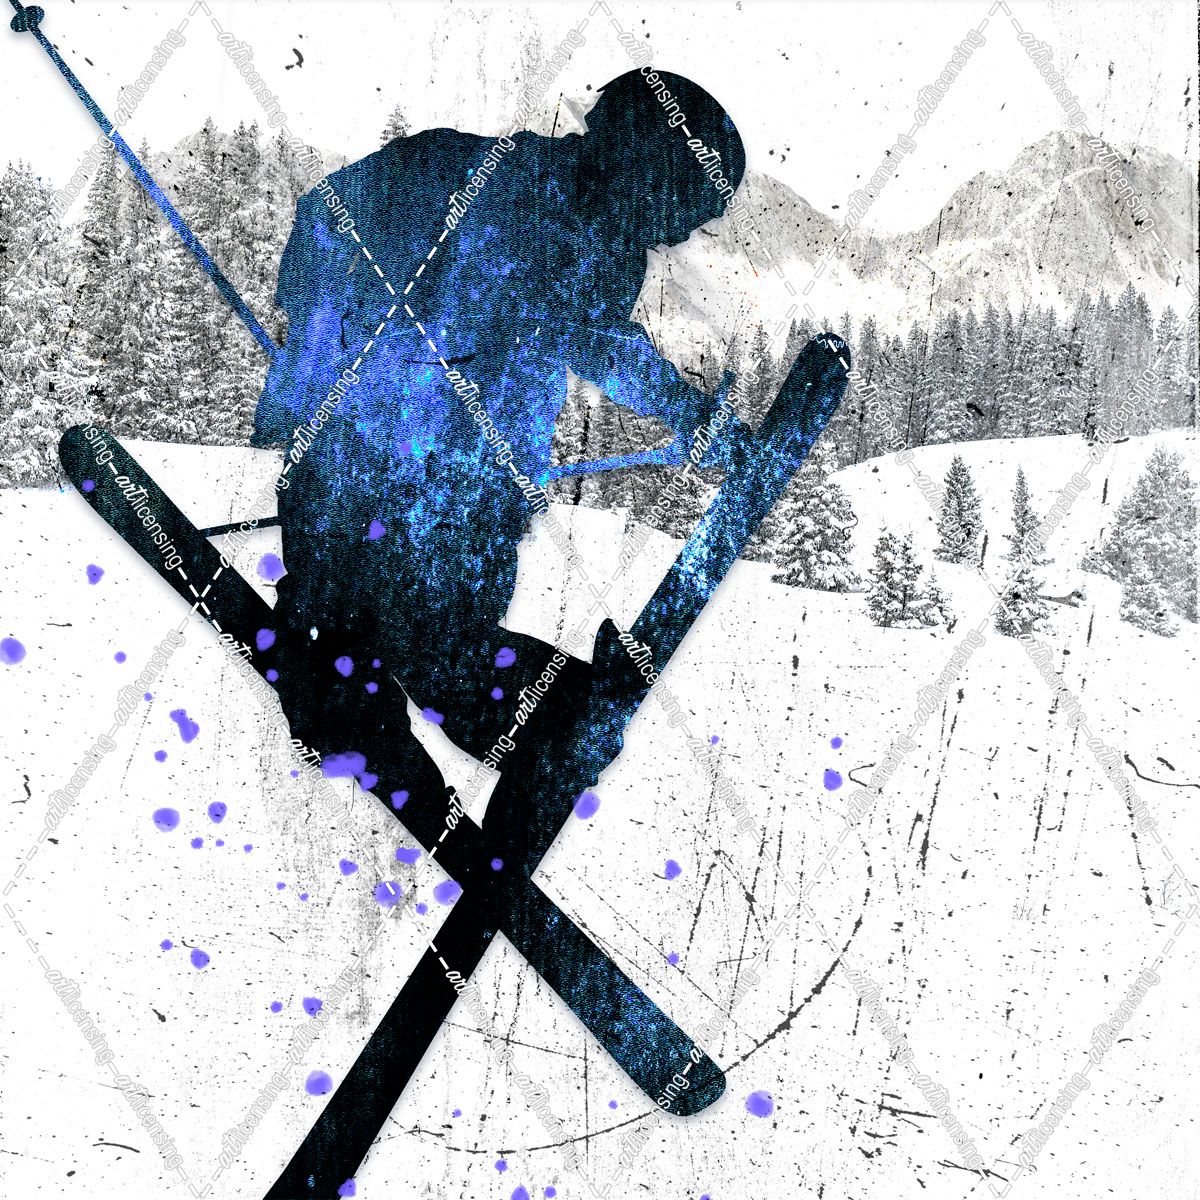 Extreme Skier 04